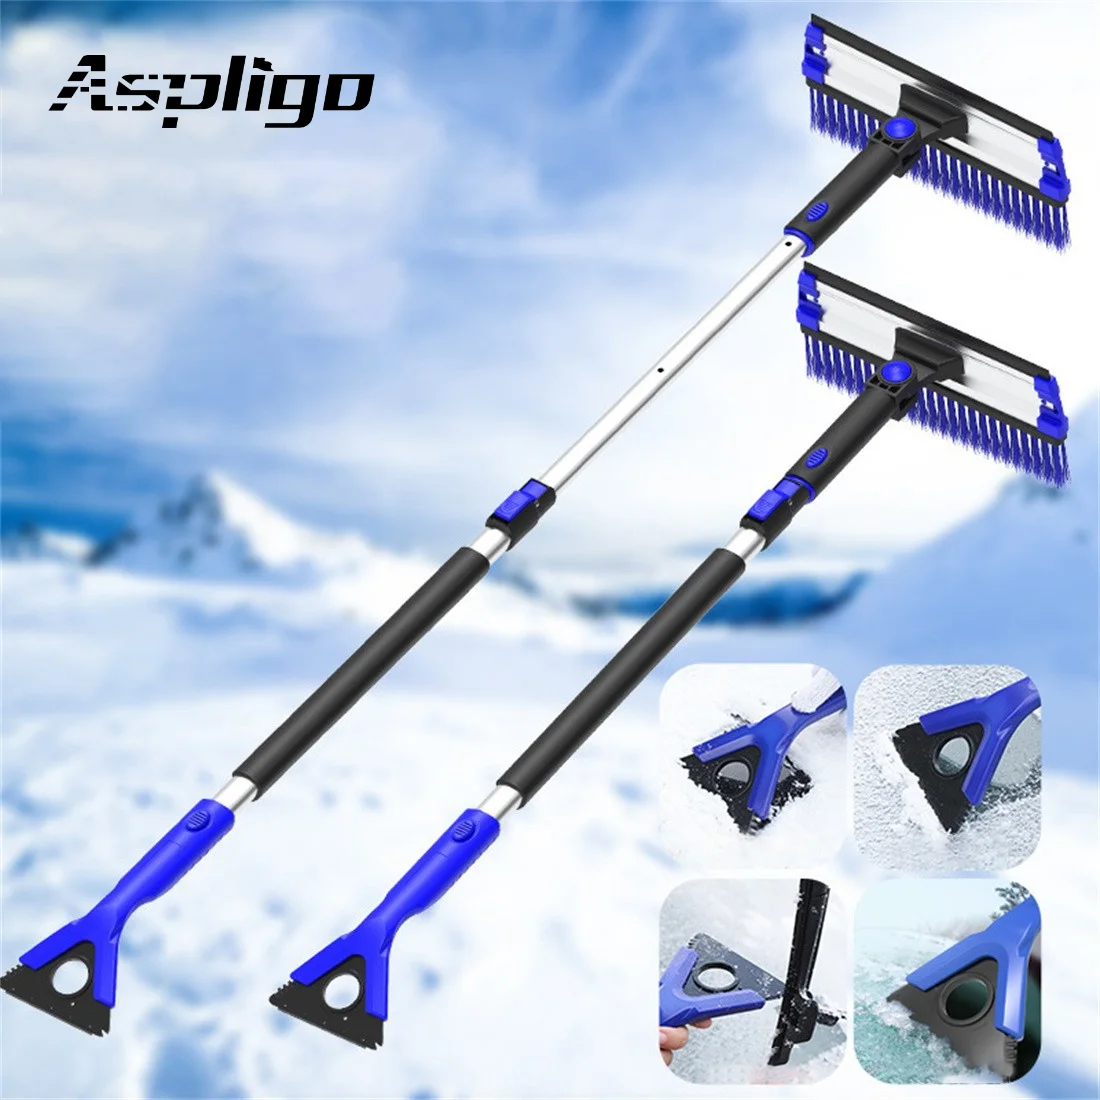 

Aspligo Extendable Snow Shovel Ice Scraper Snow Brush Water Remover For Car Windshield Window Snow Frost Cleaner Winter Tool